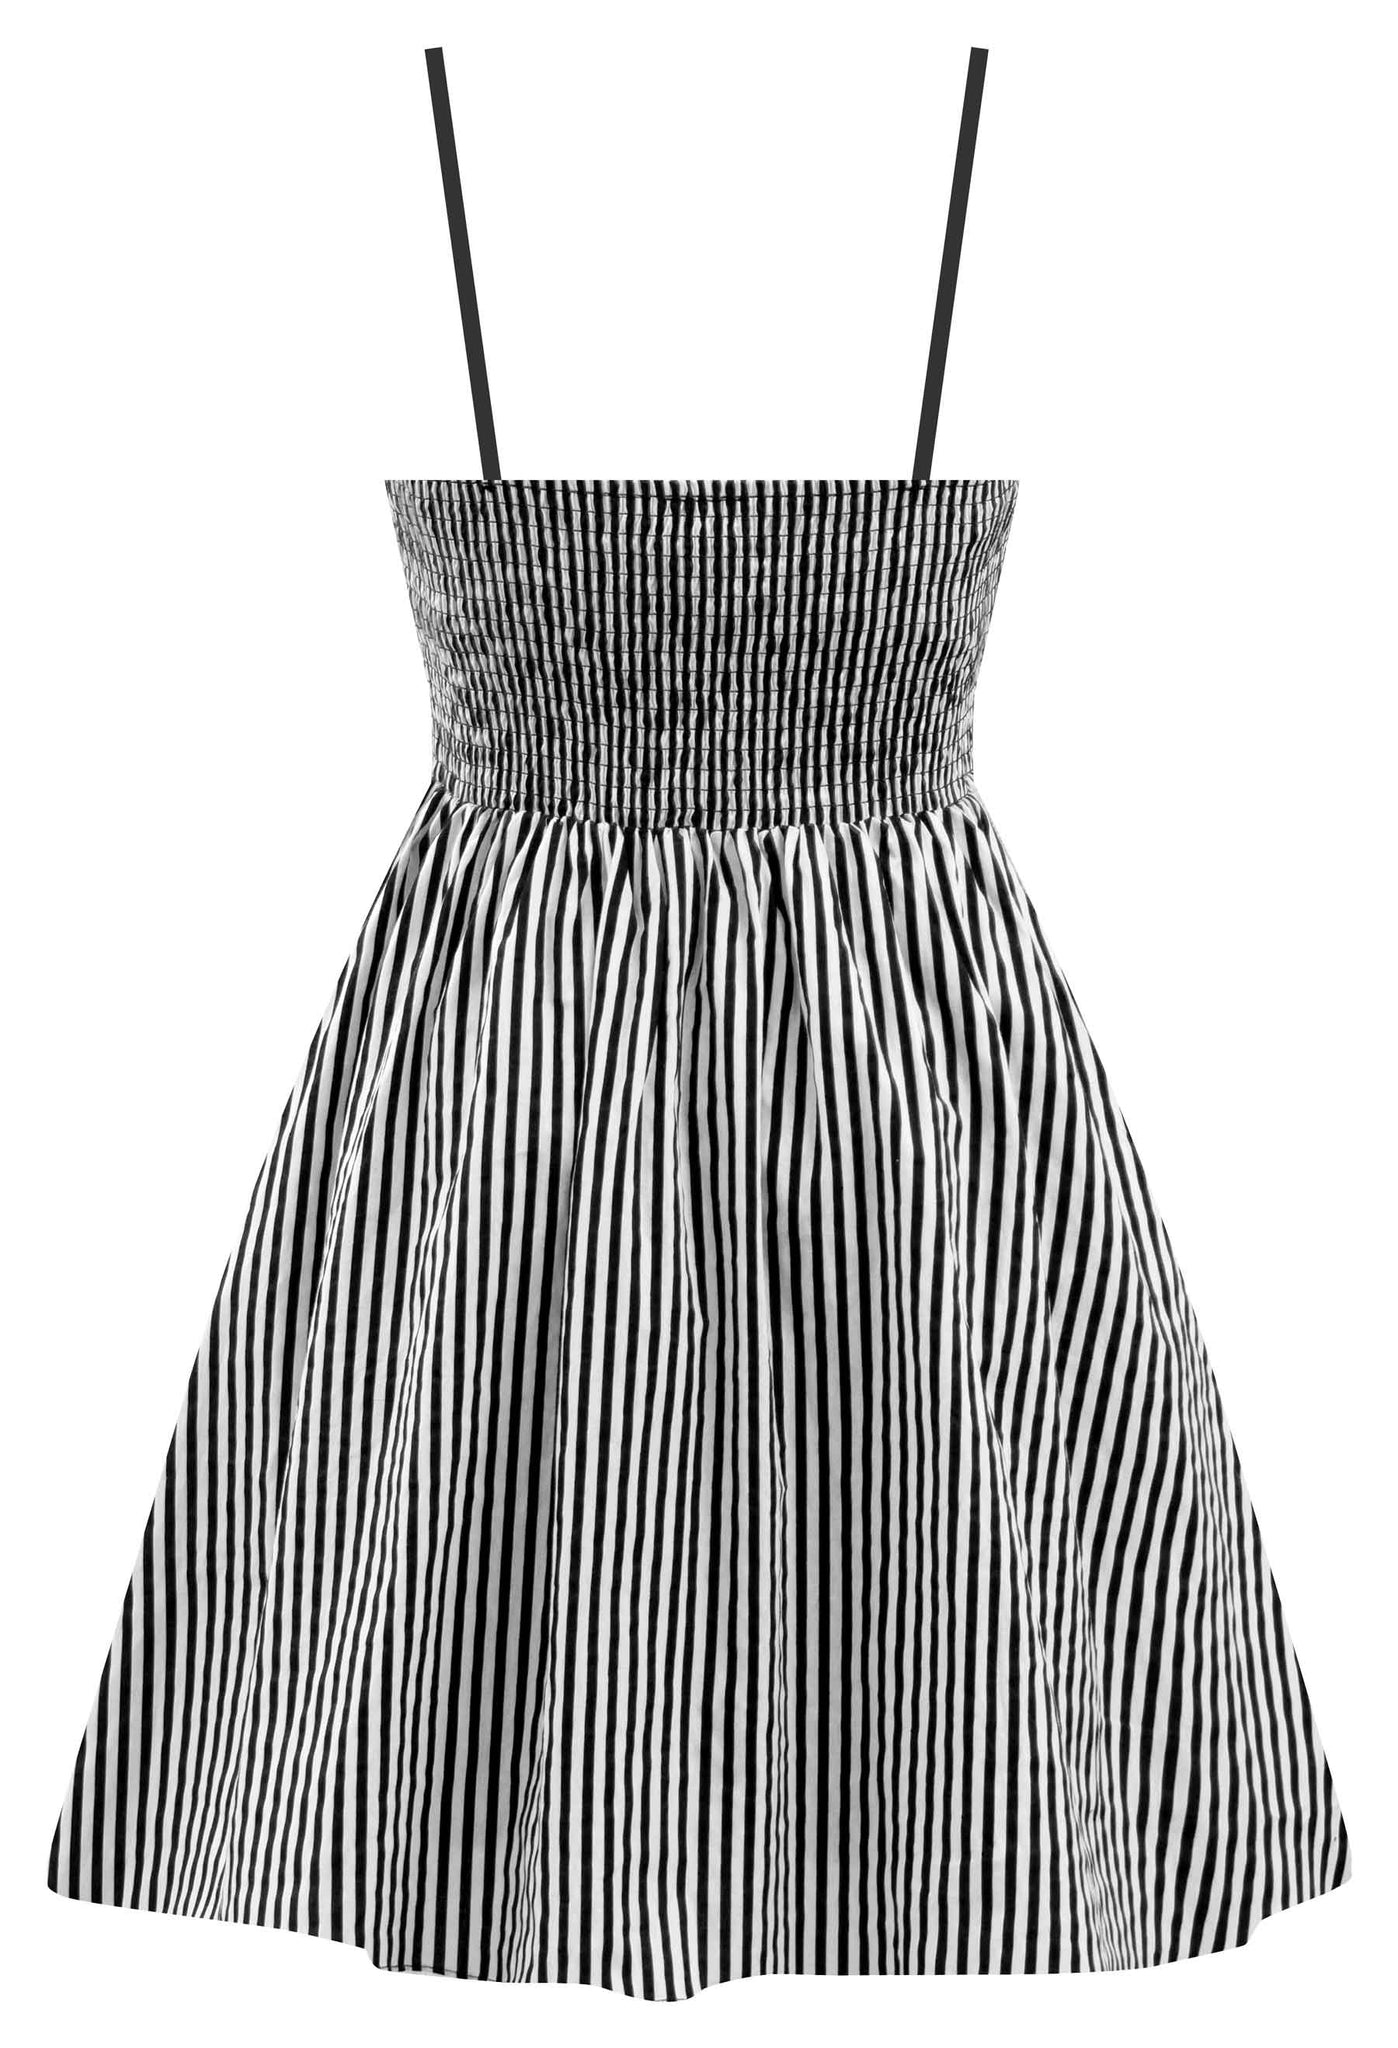 Black & White Striped Retro Doll Dress | Double Trouble Apparel